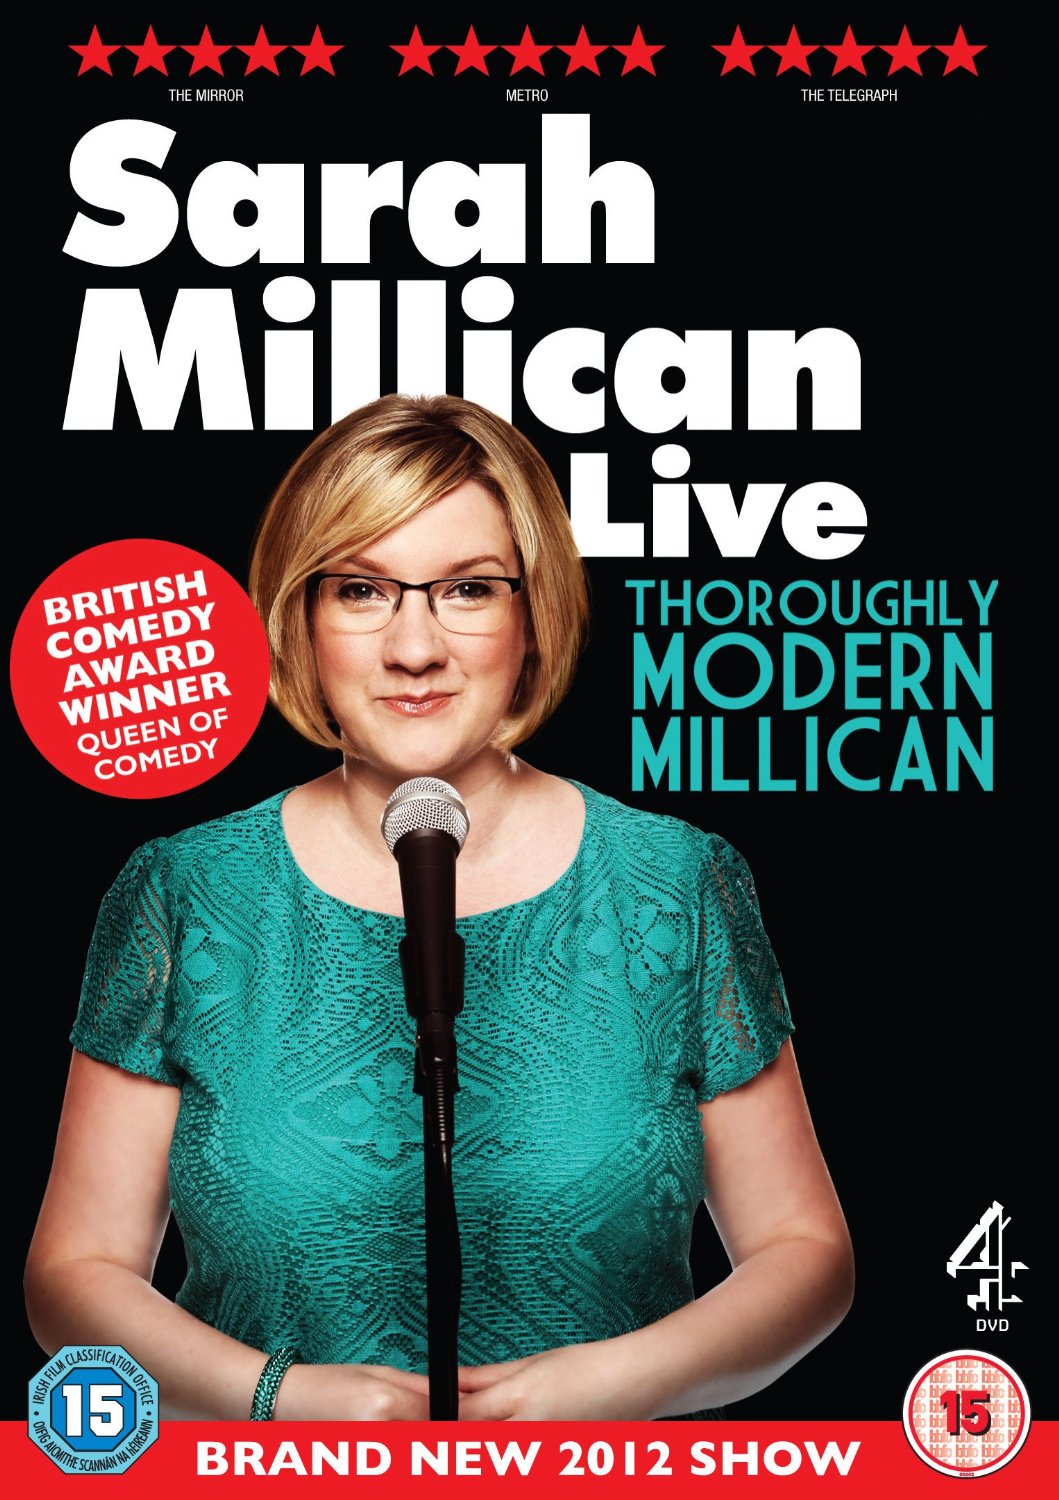 Sarah Millican: Thoroughly Modern Millican